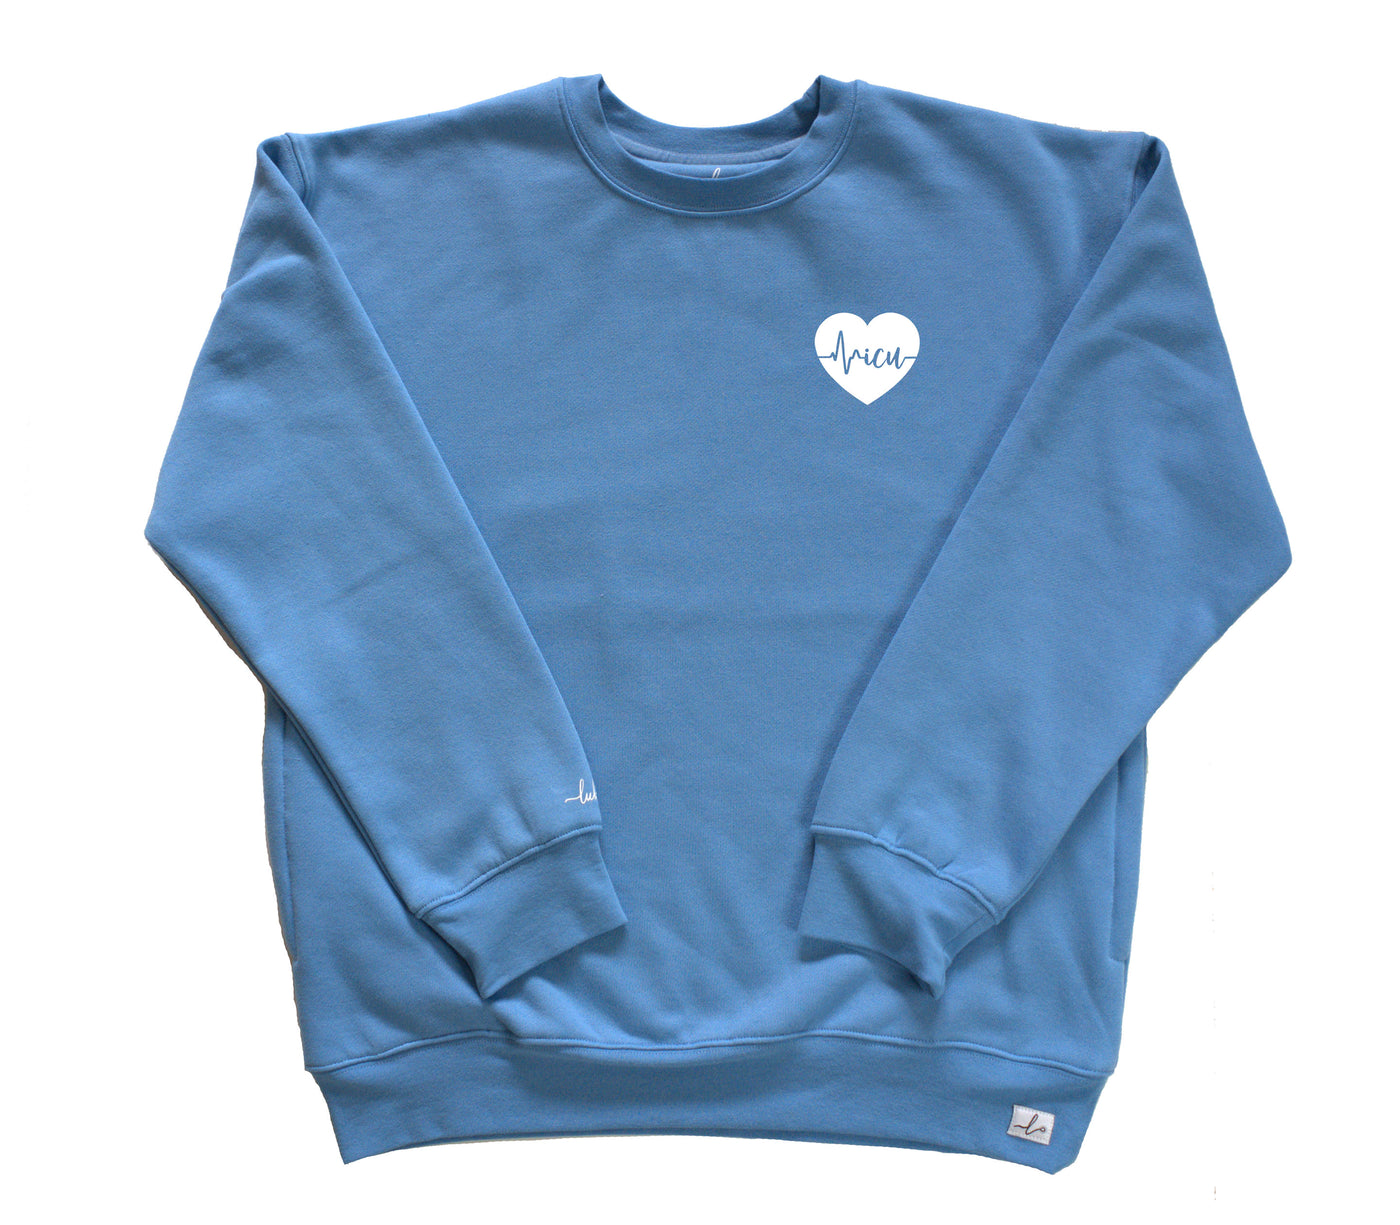 ICU ECG Heart - Pocketed Crew Sweatshirt